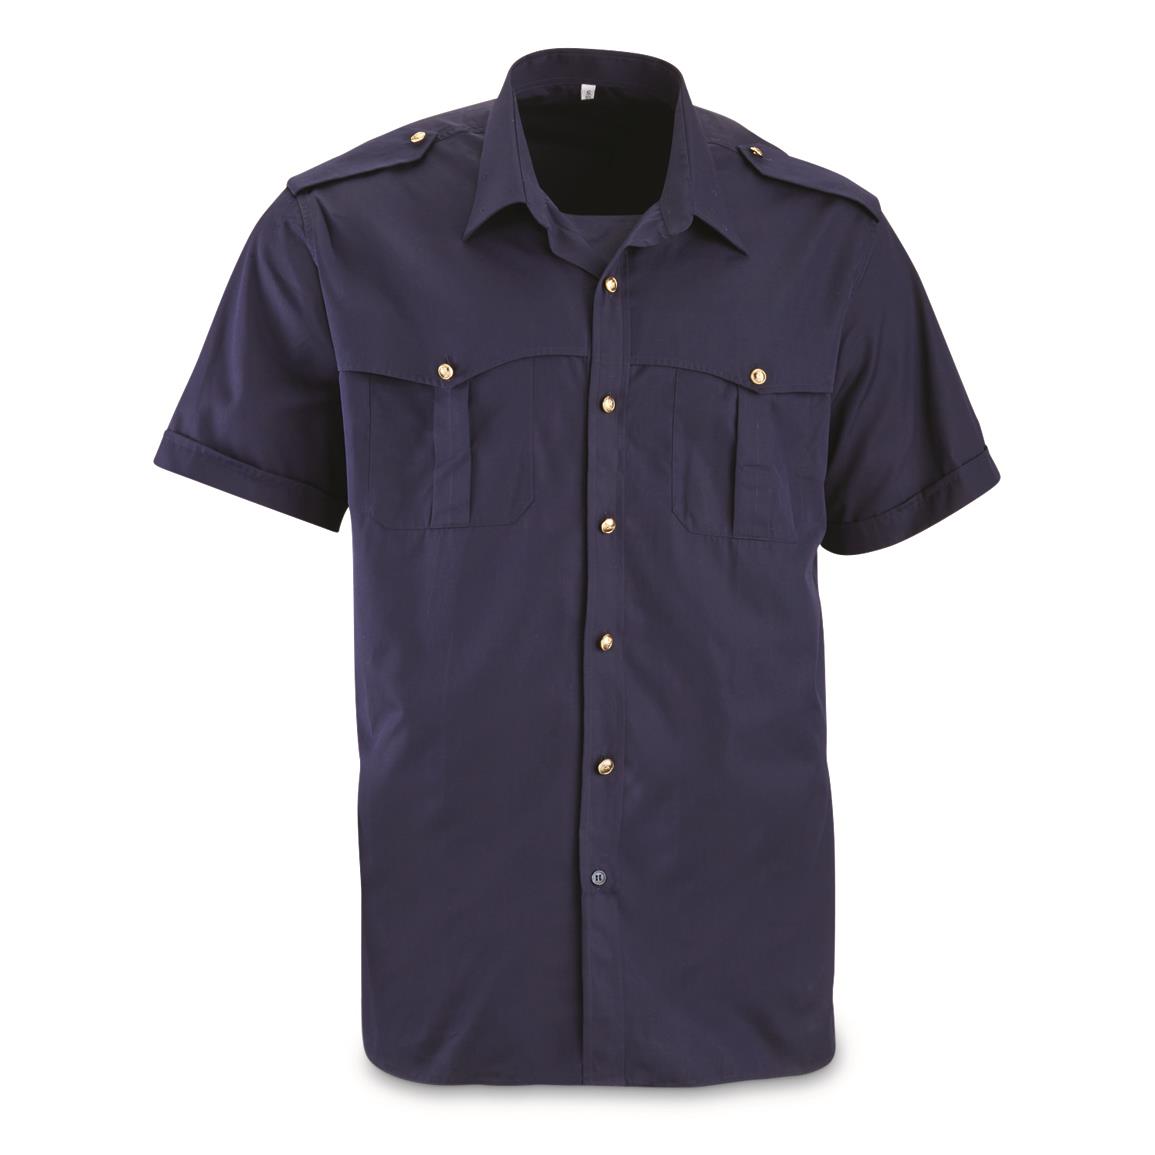 Italian Carabinieri Police Surplus Short Sleeve Uniform Shirts, 3 Pack, New, Navy